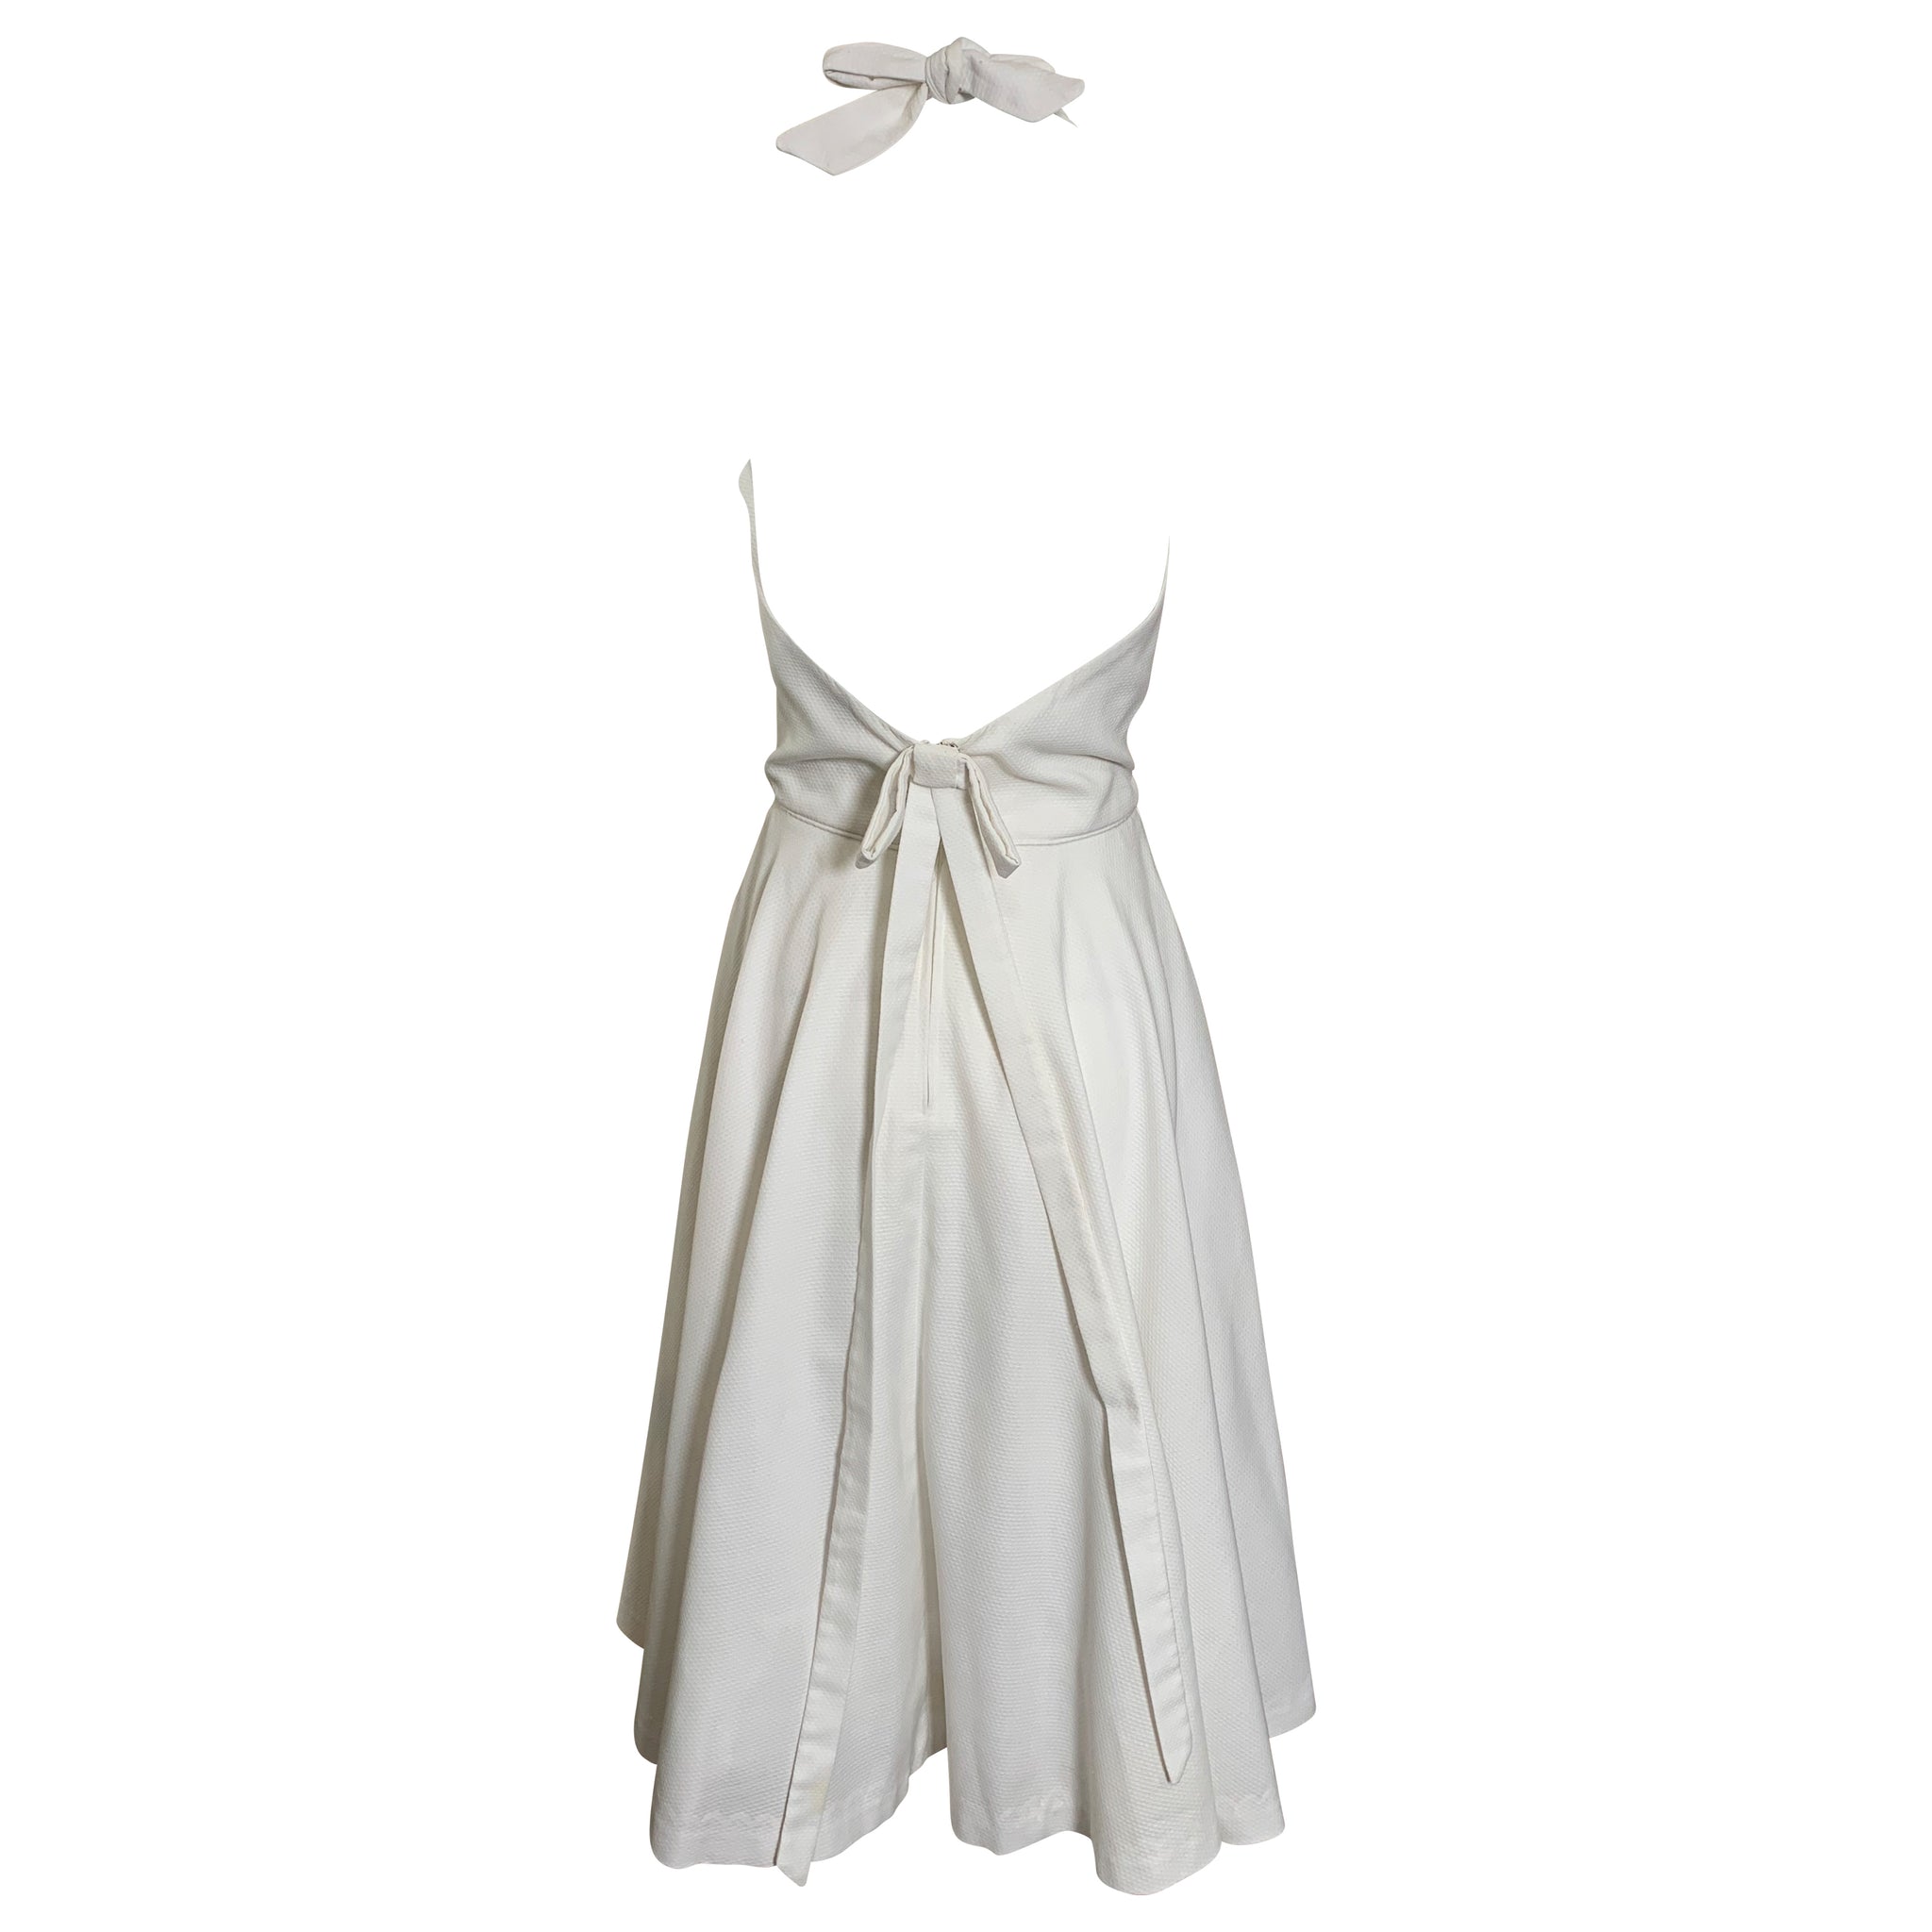 1980s Does 1950s White Pique Halter Dress BACK 3 of 5